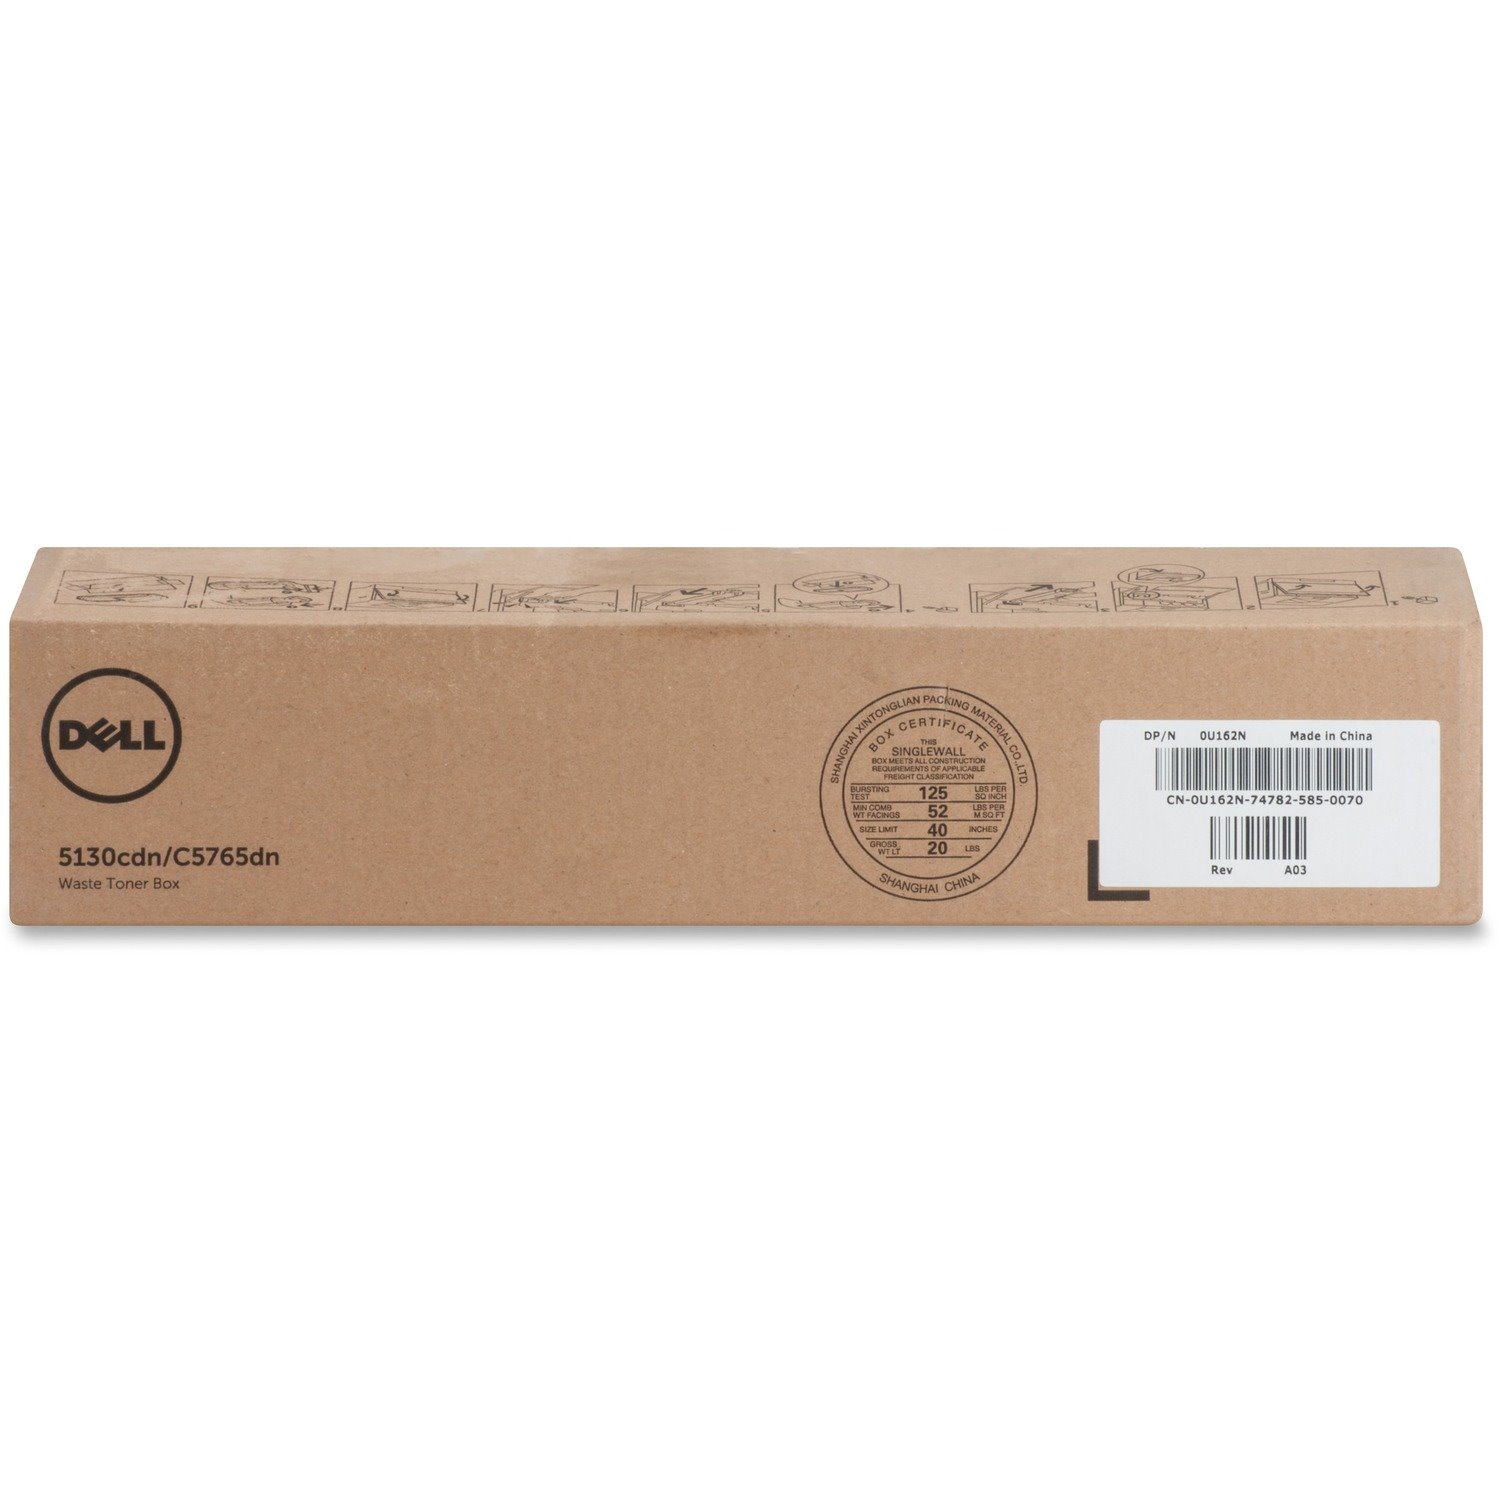 Dell 5130cdn/5765dn Toner Waste Container